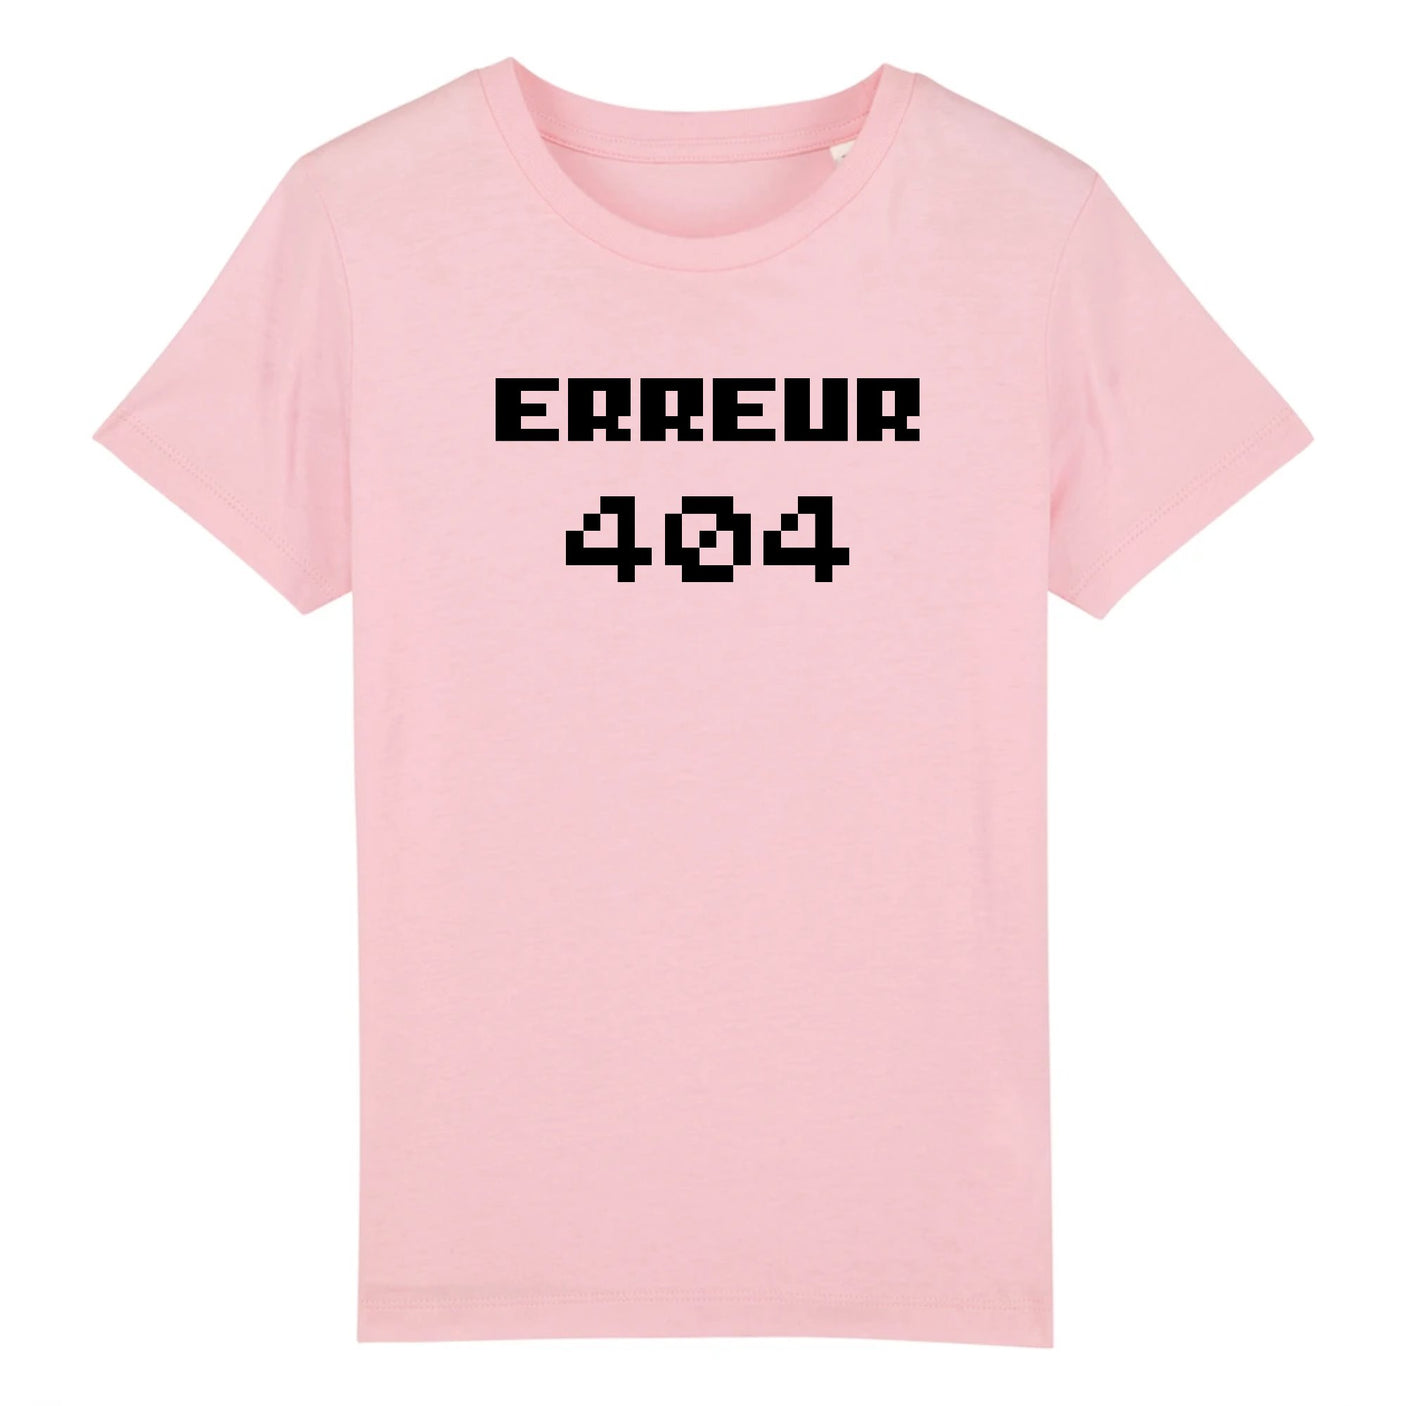 T-Shirt Enfant Erreur 404 